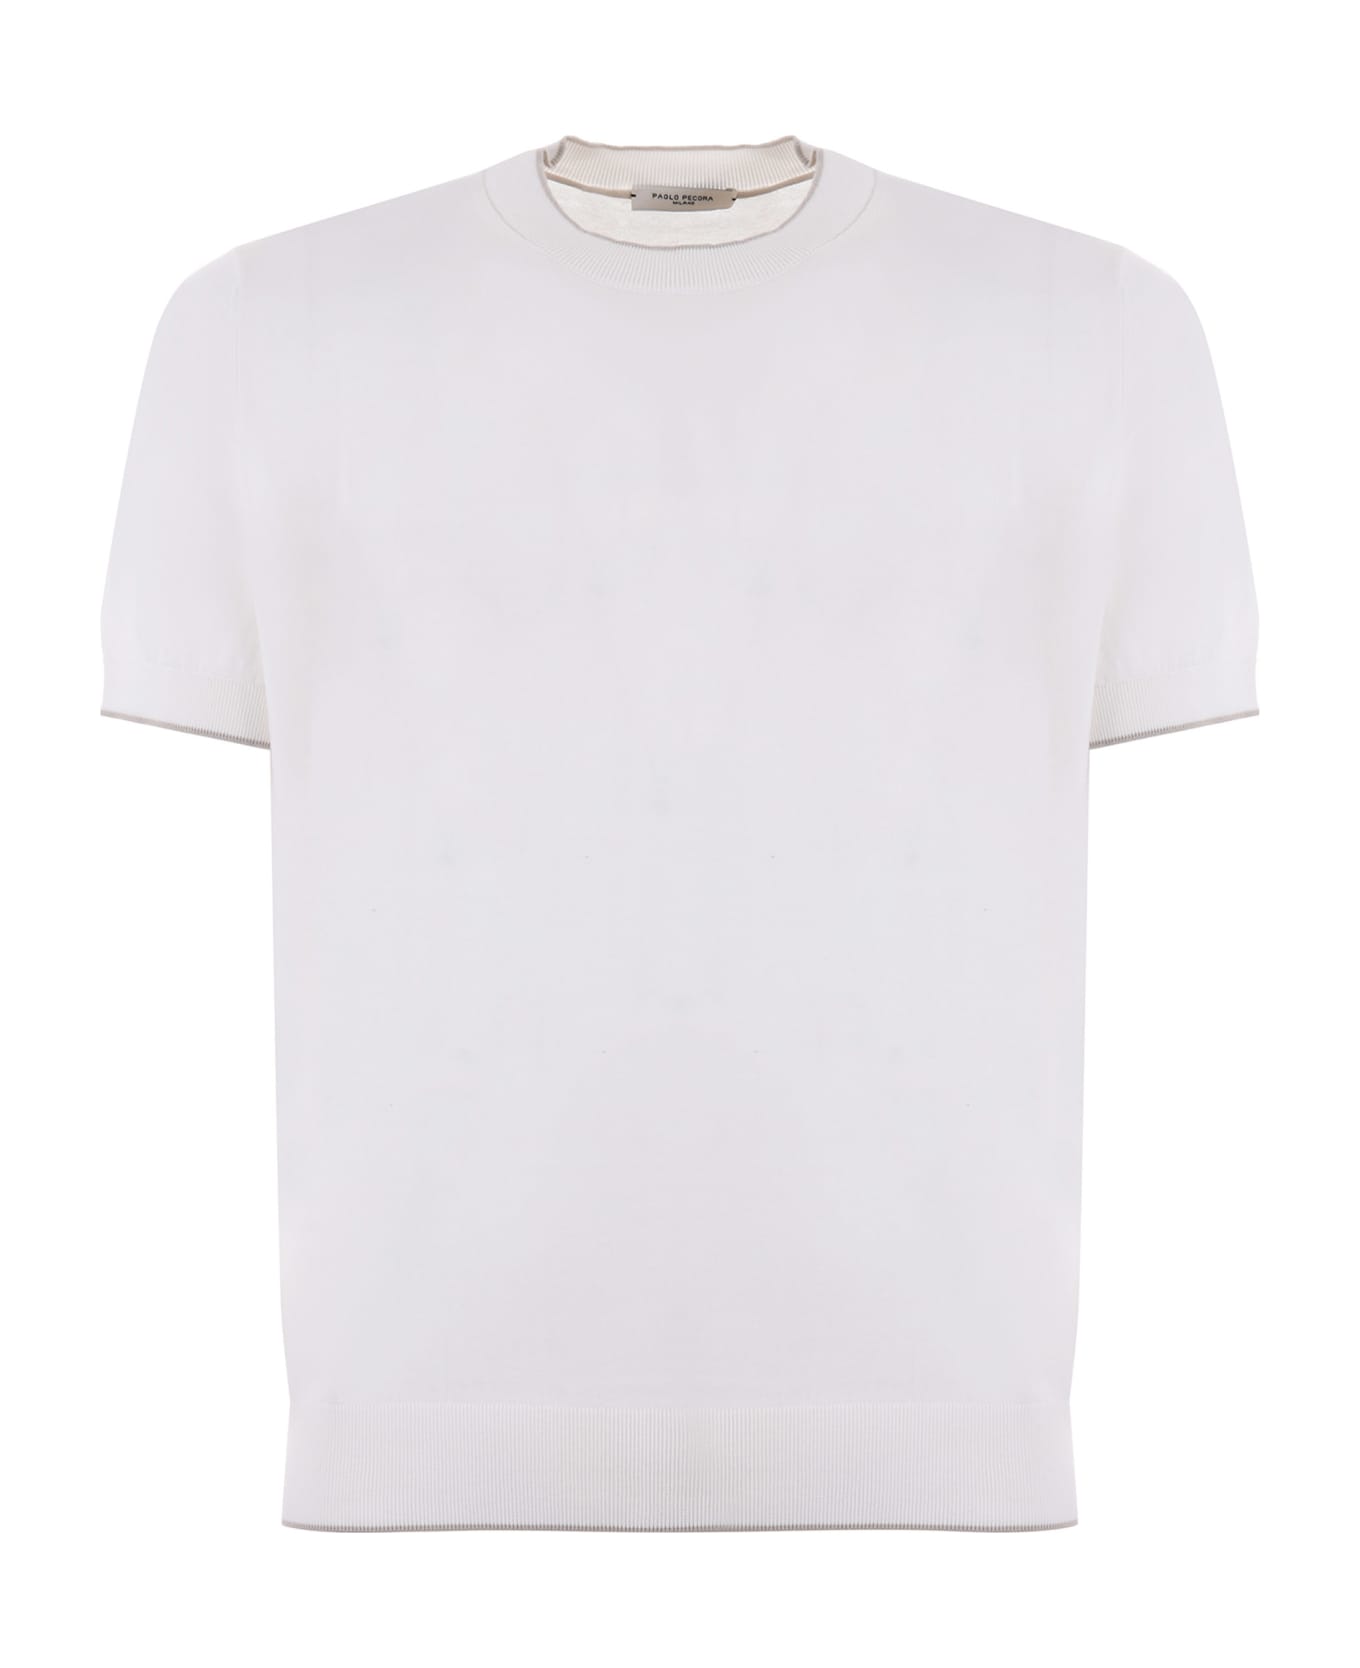 Paolo Pecora T-shirt Cotton Thread - Bianco シャツ